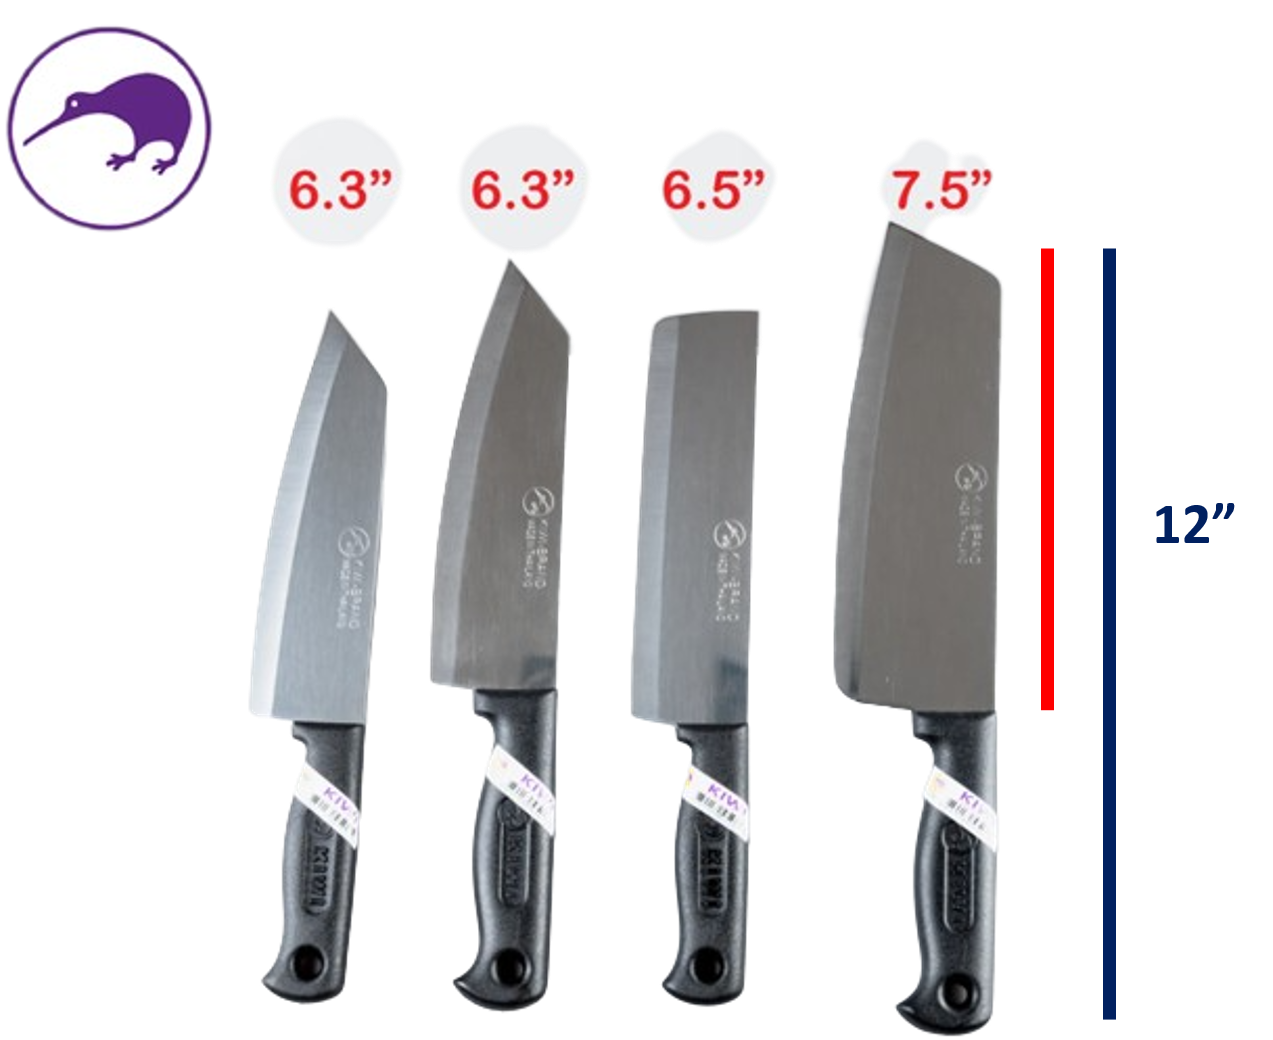 KIWI Thai Knife Kitchen Dishwasher Safe Stainless-Steel Slicing Cutting Meat Fish Blade Sharp Strong Set 4 Pieces